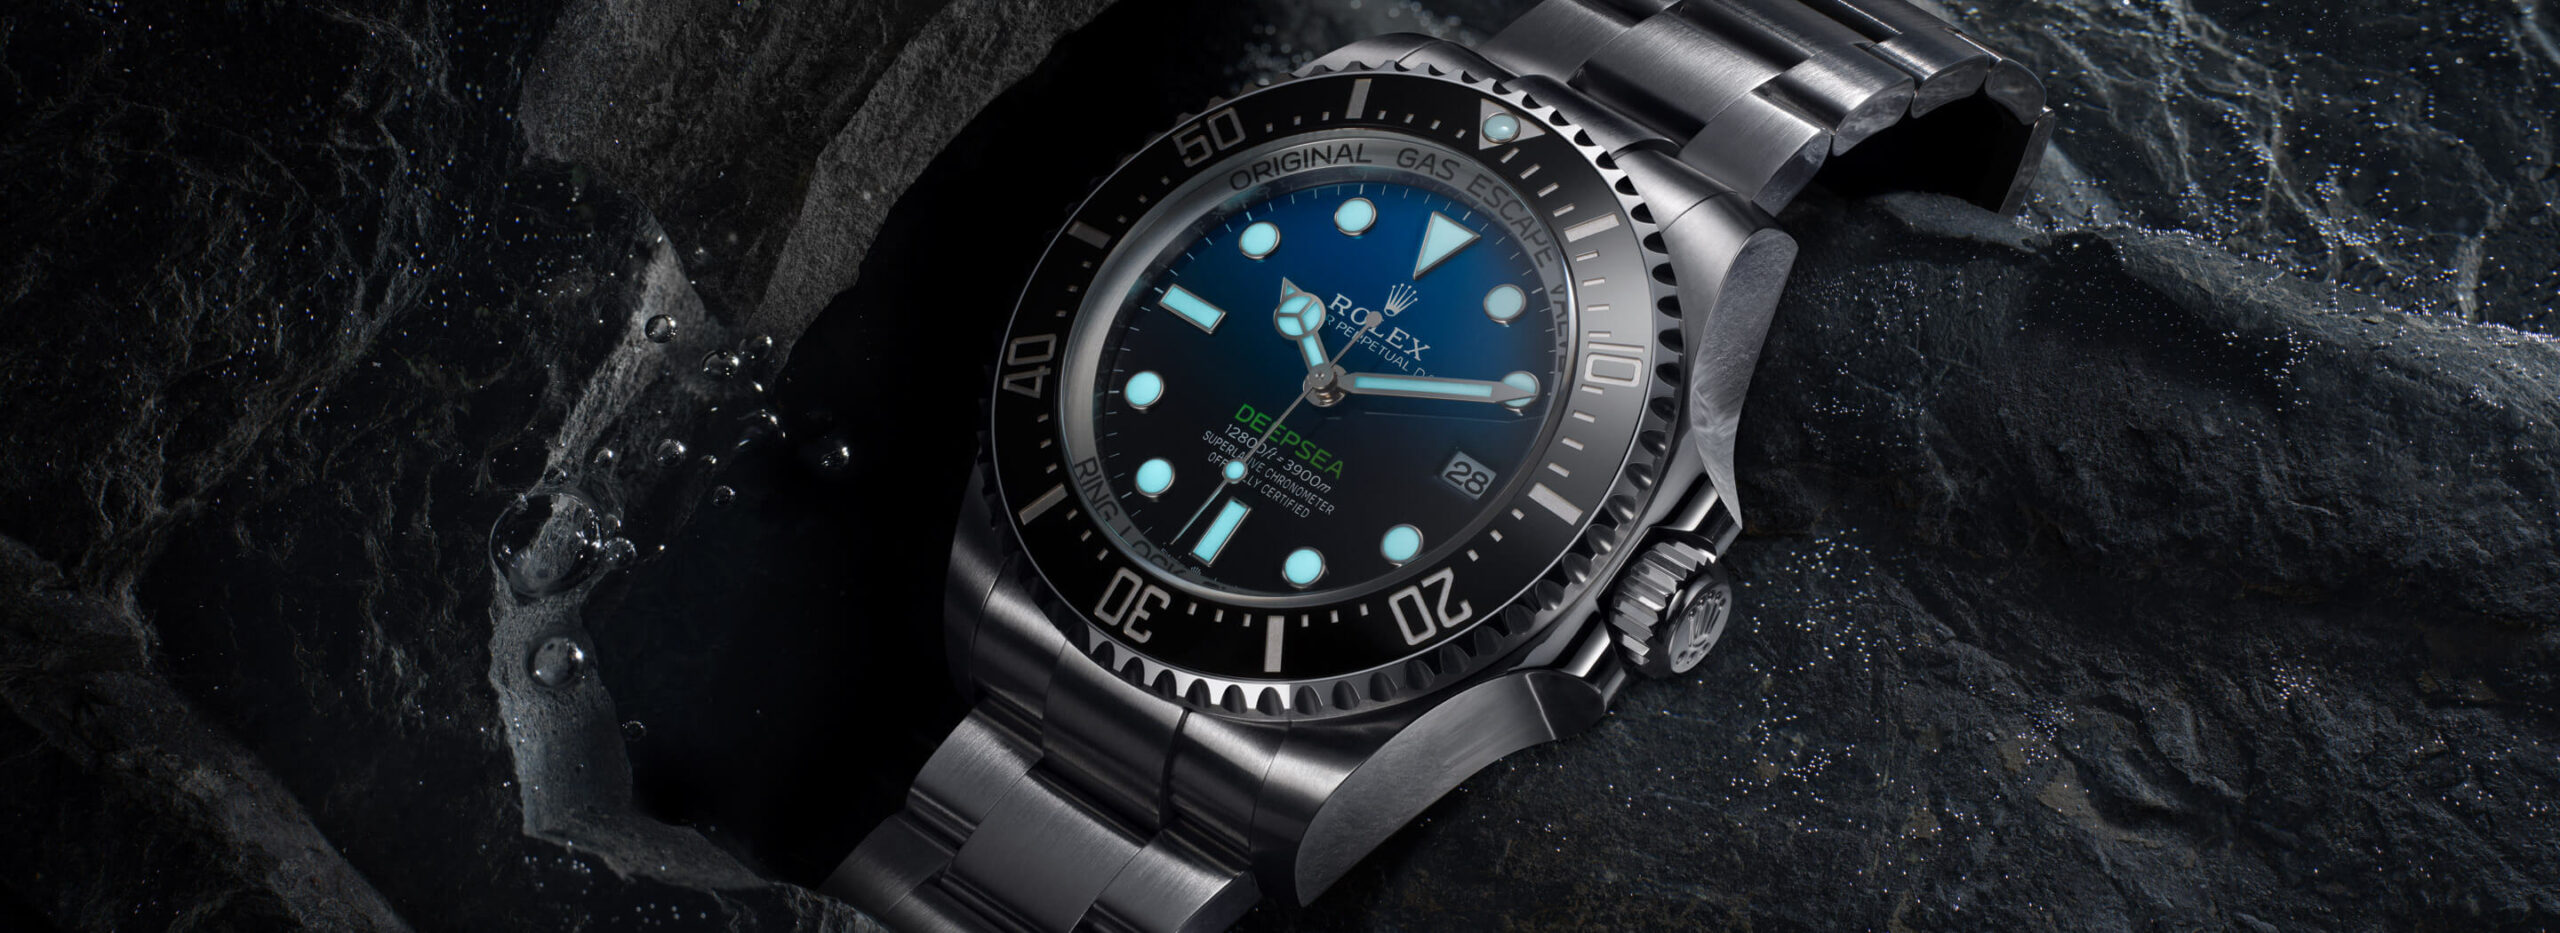 rolex deepsea watches - global watch company